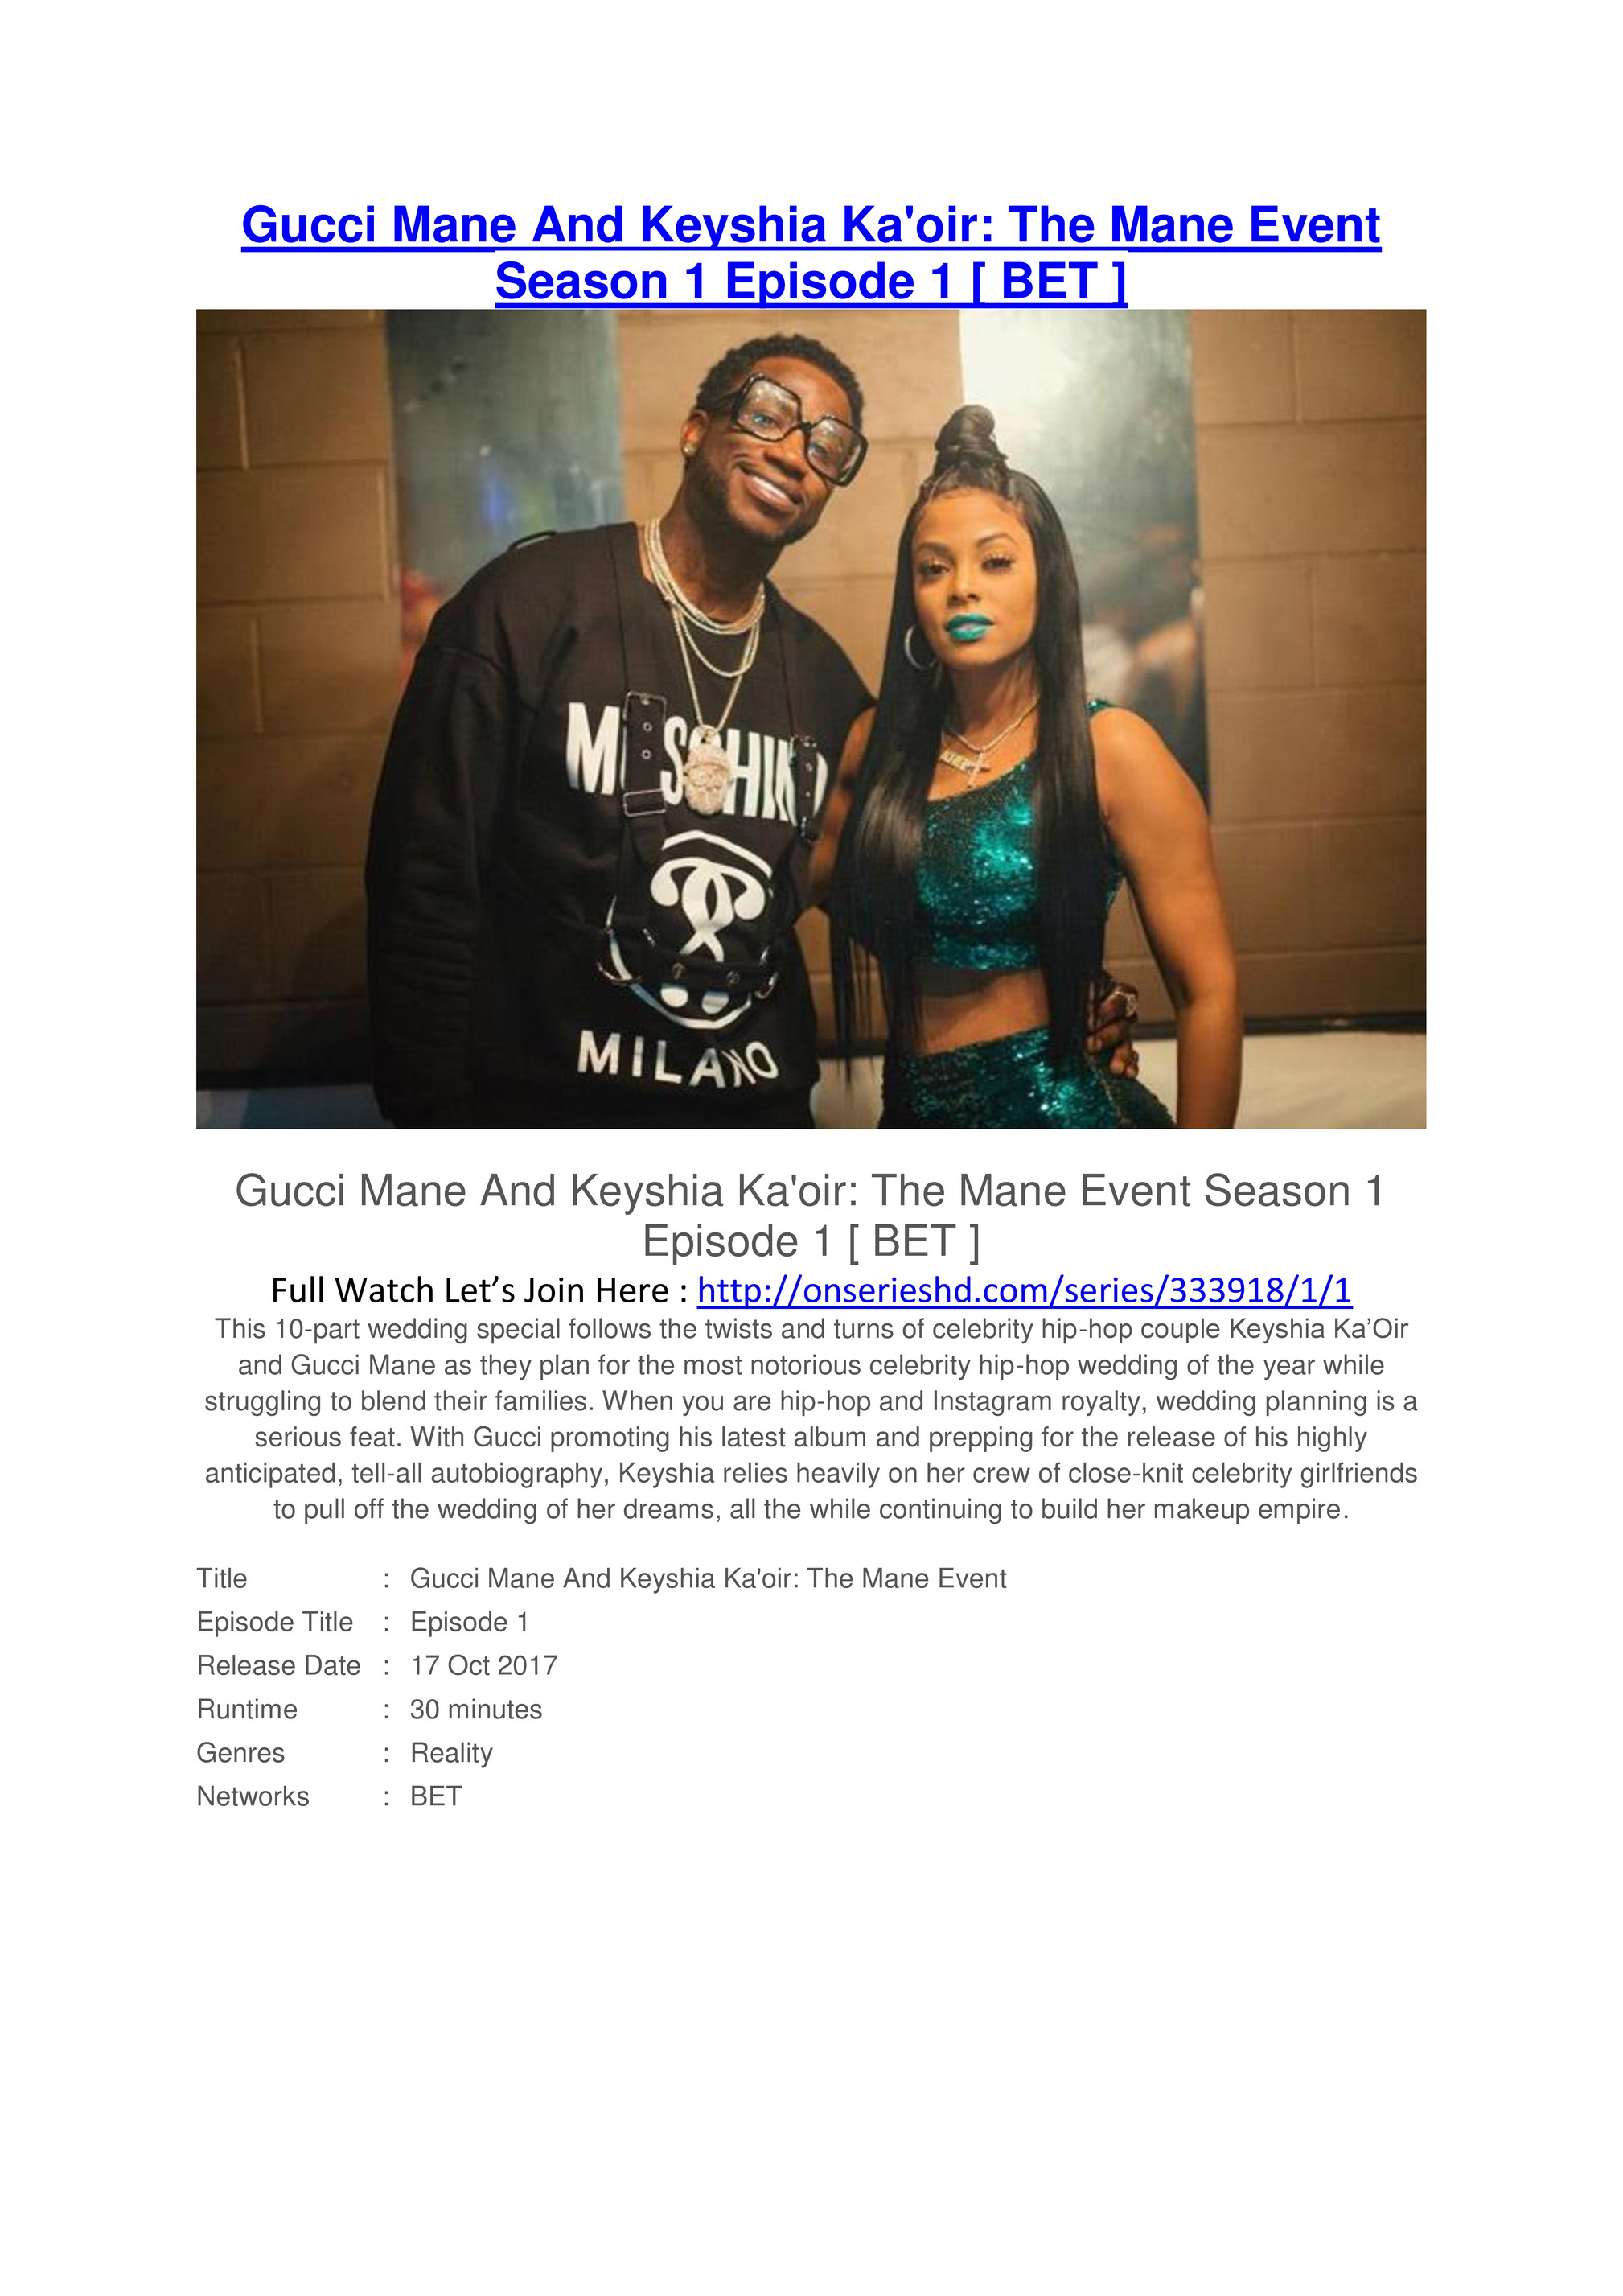 Møntvask broderi kalv s01xe01 } Live~Streaming! Gucci Mane And Keyshia Ka'oir The Mane Event -  Page 1 - Created with Publitas.com